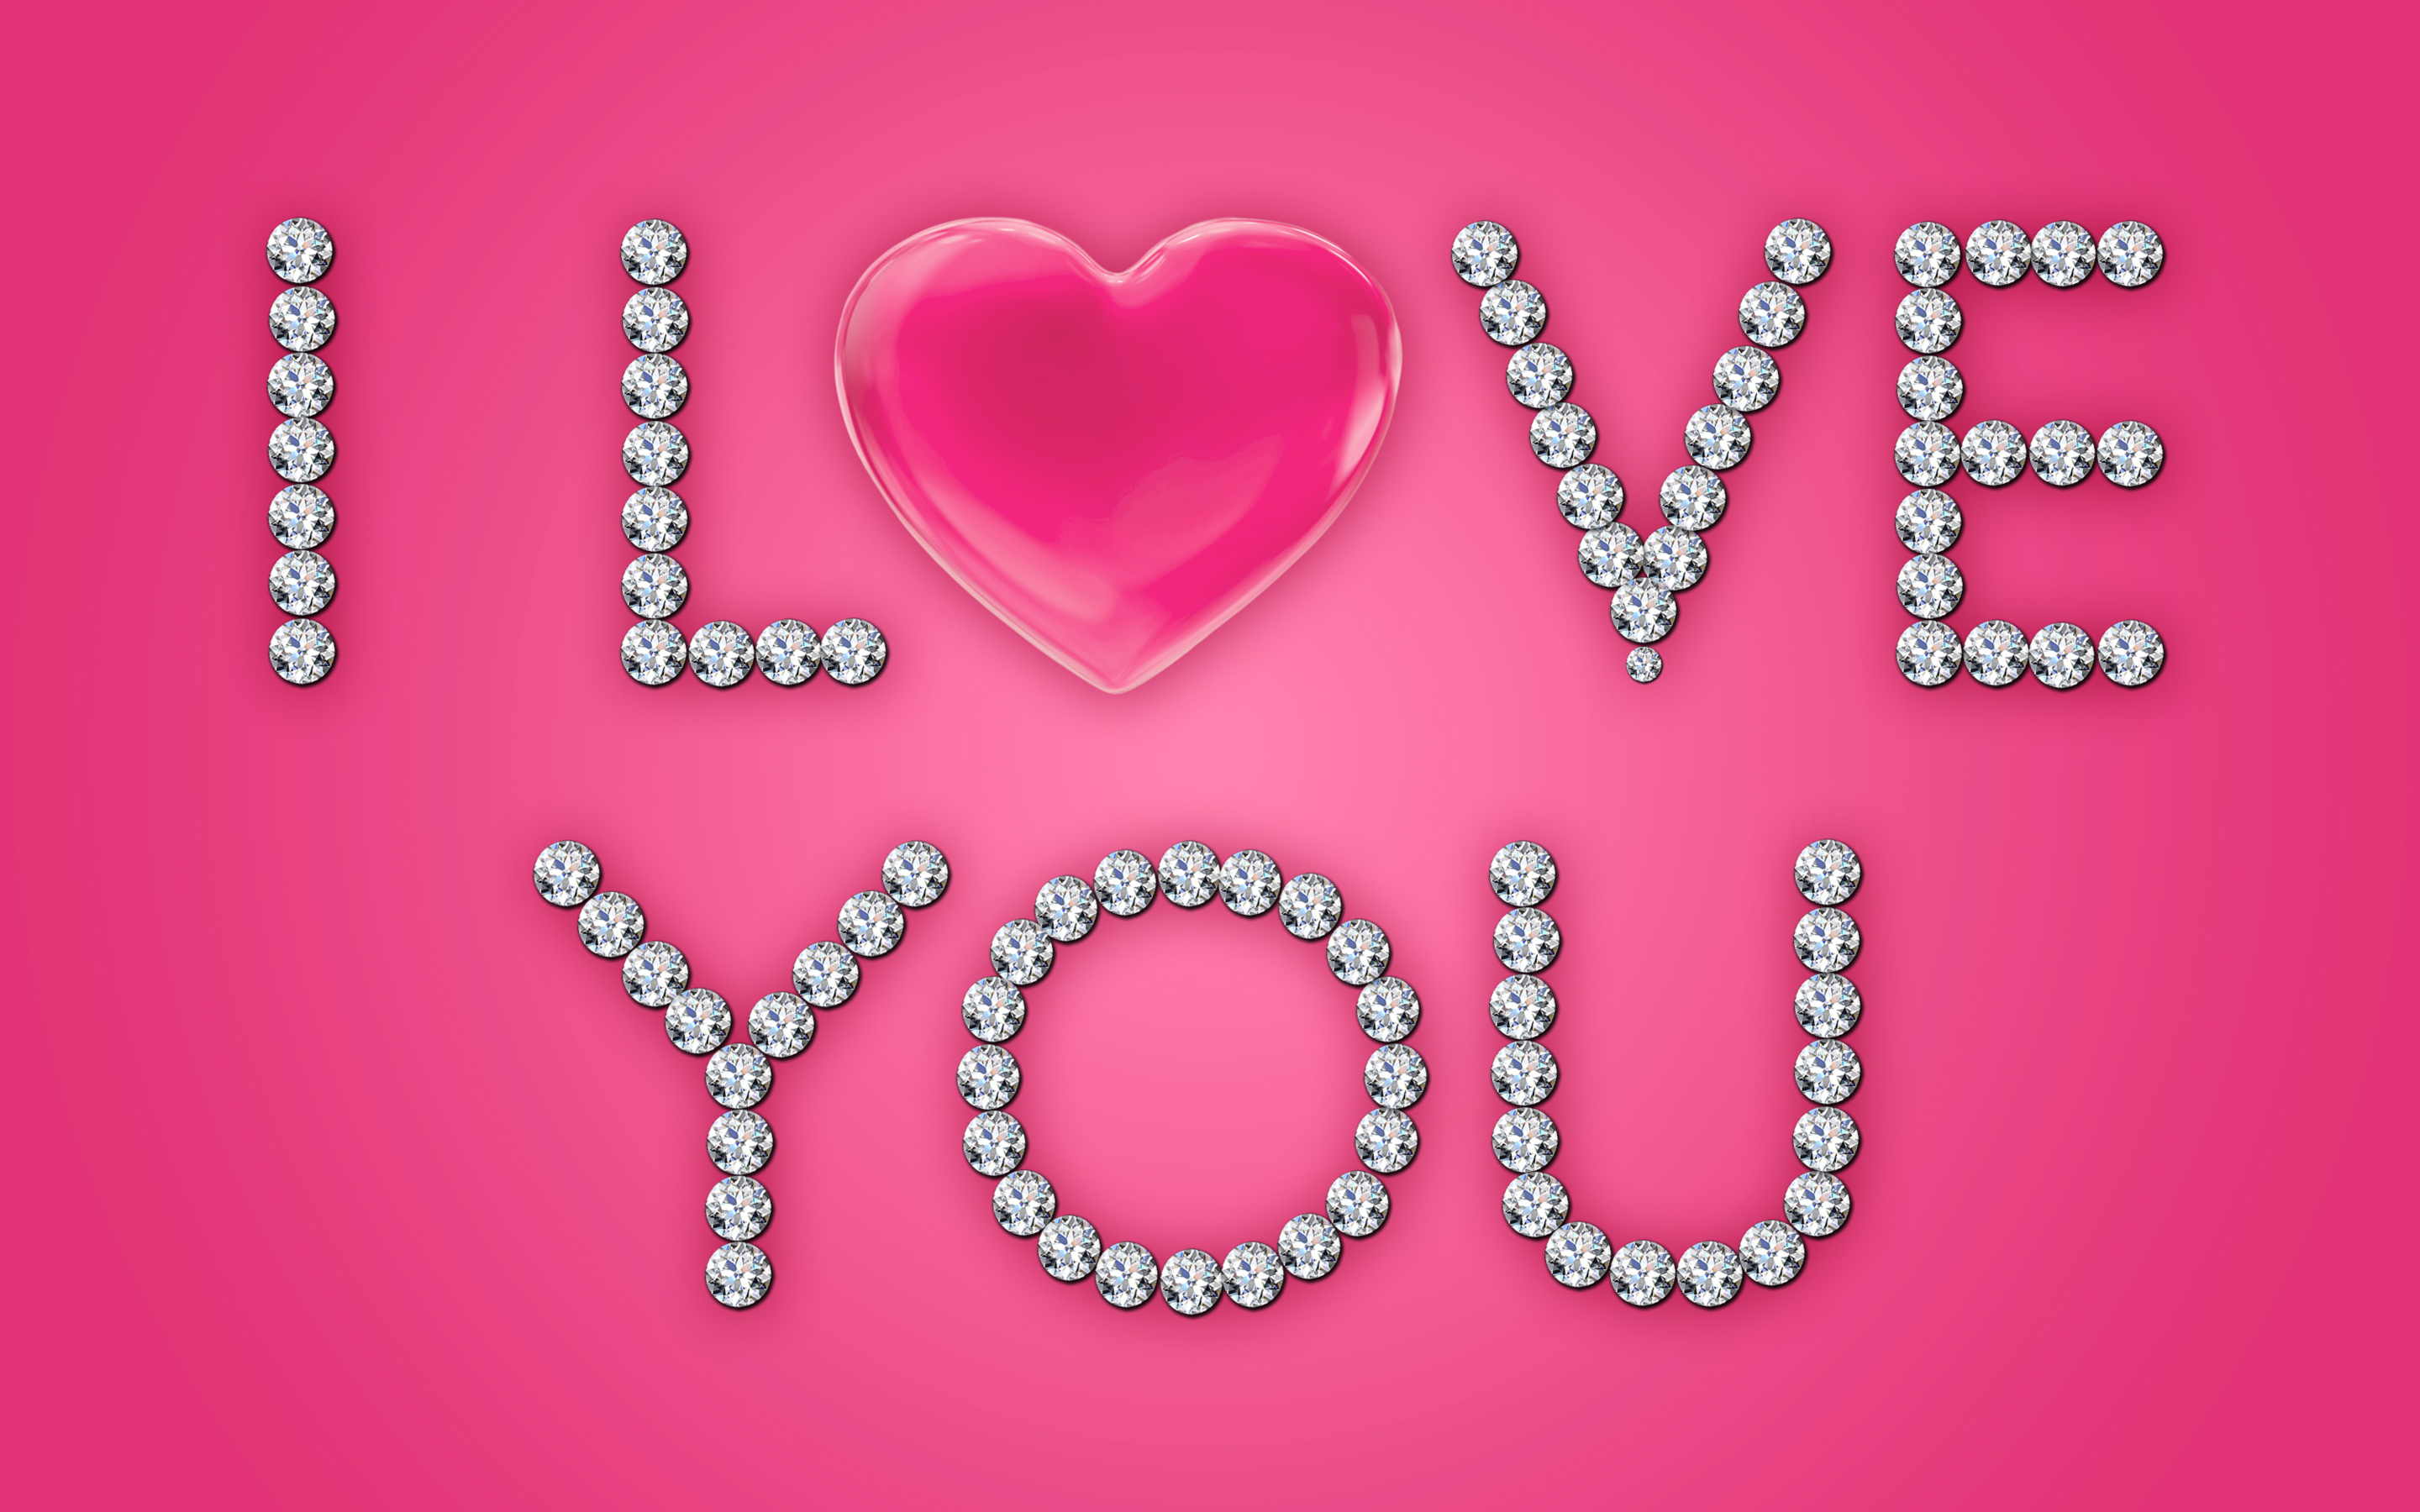 Diamond Heart I Love You - HD Wallpaper 